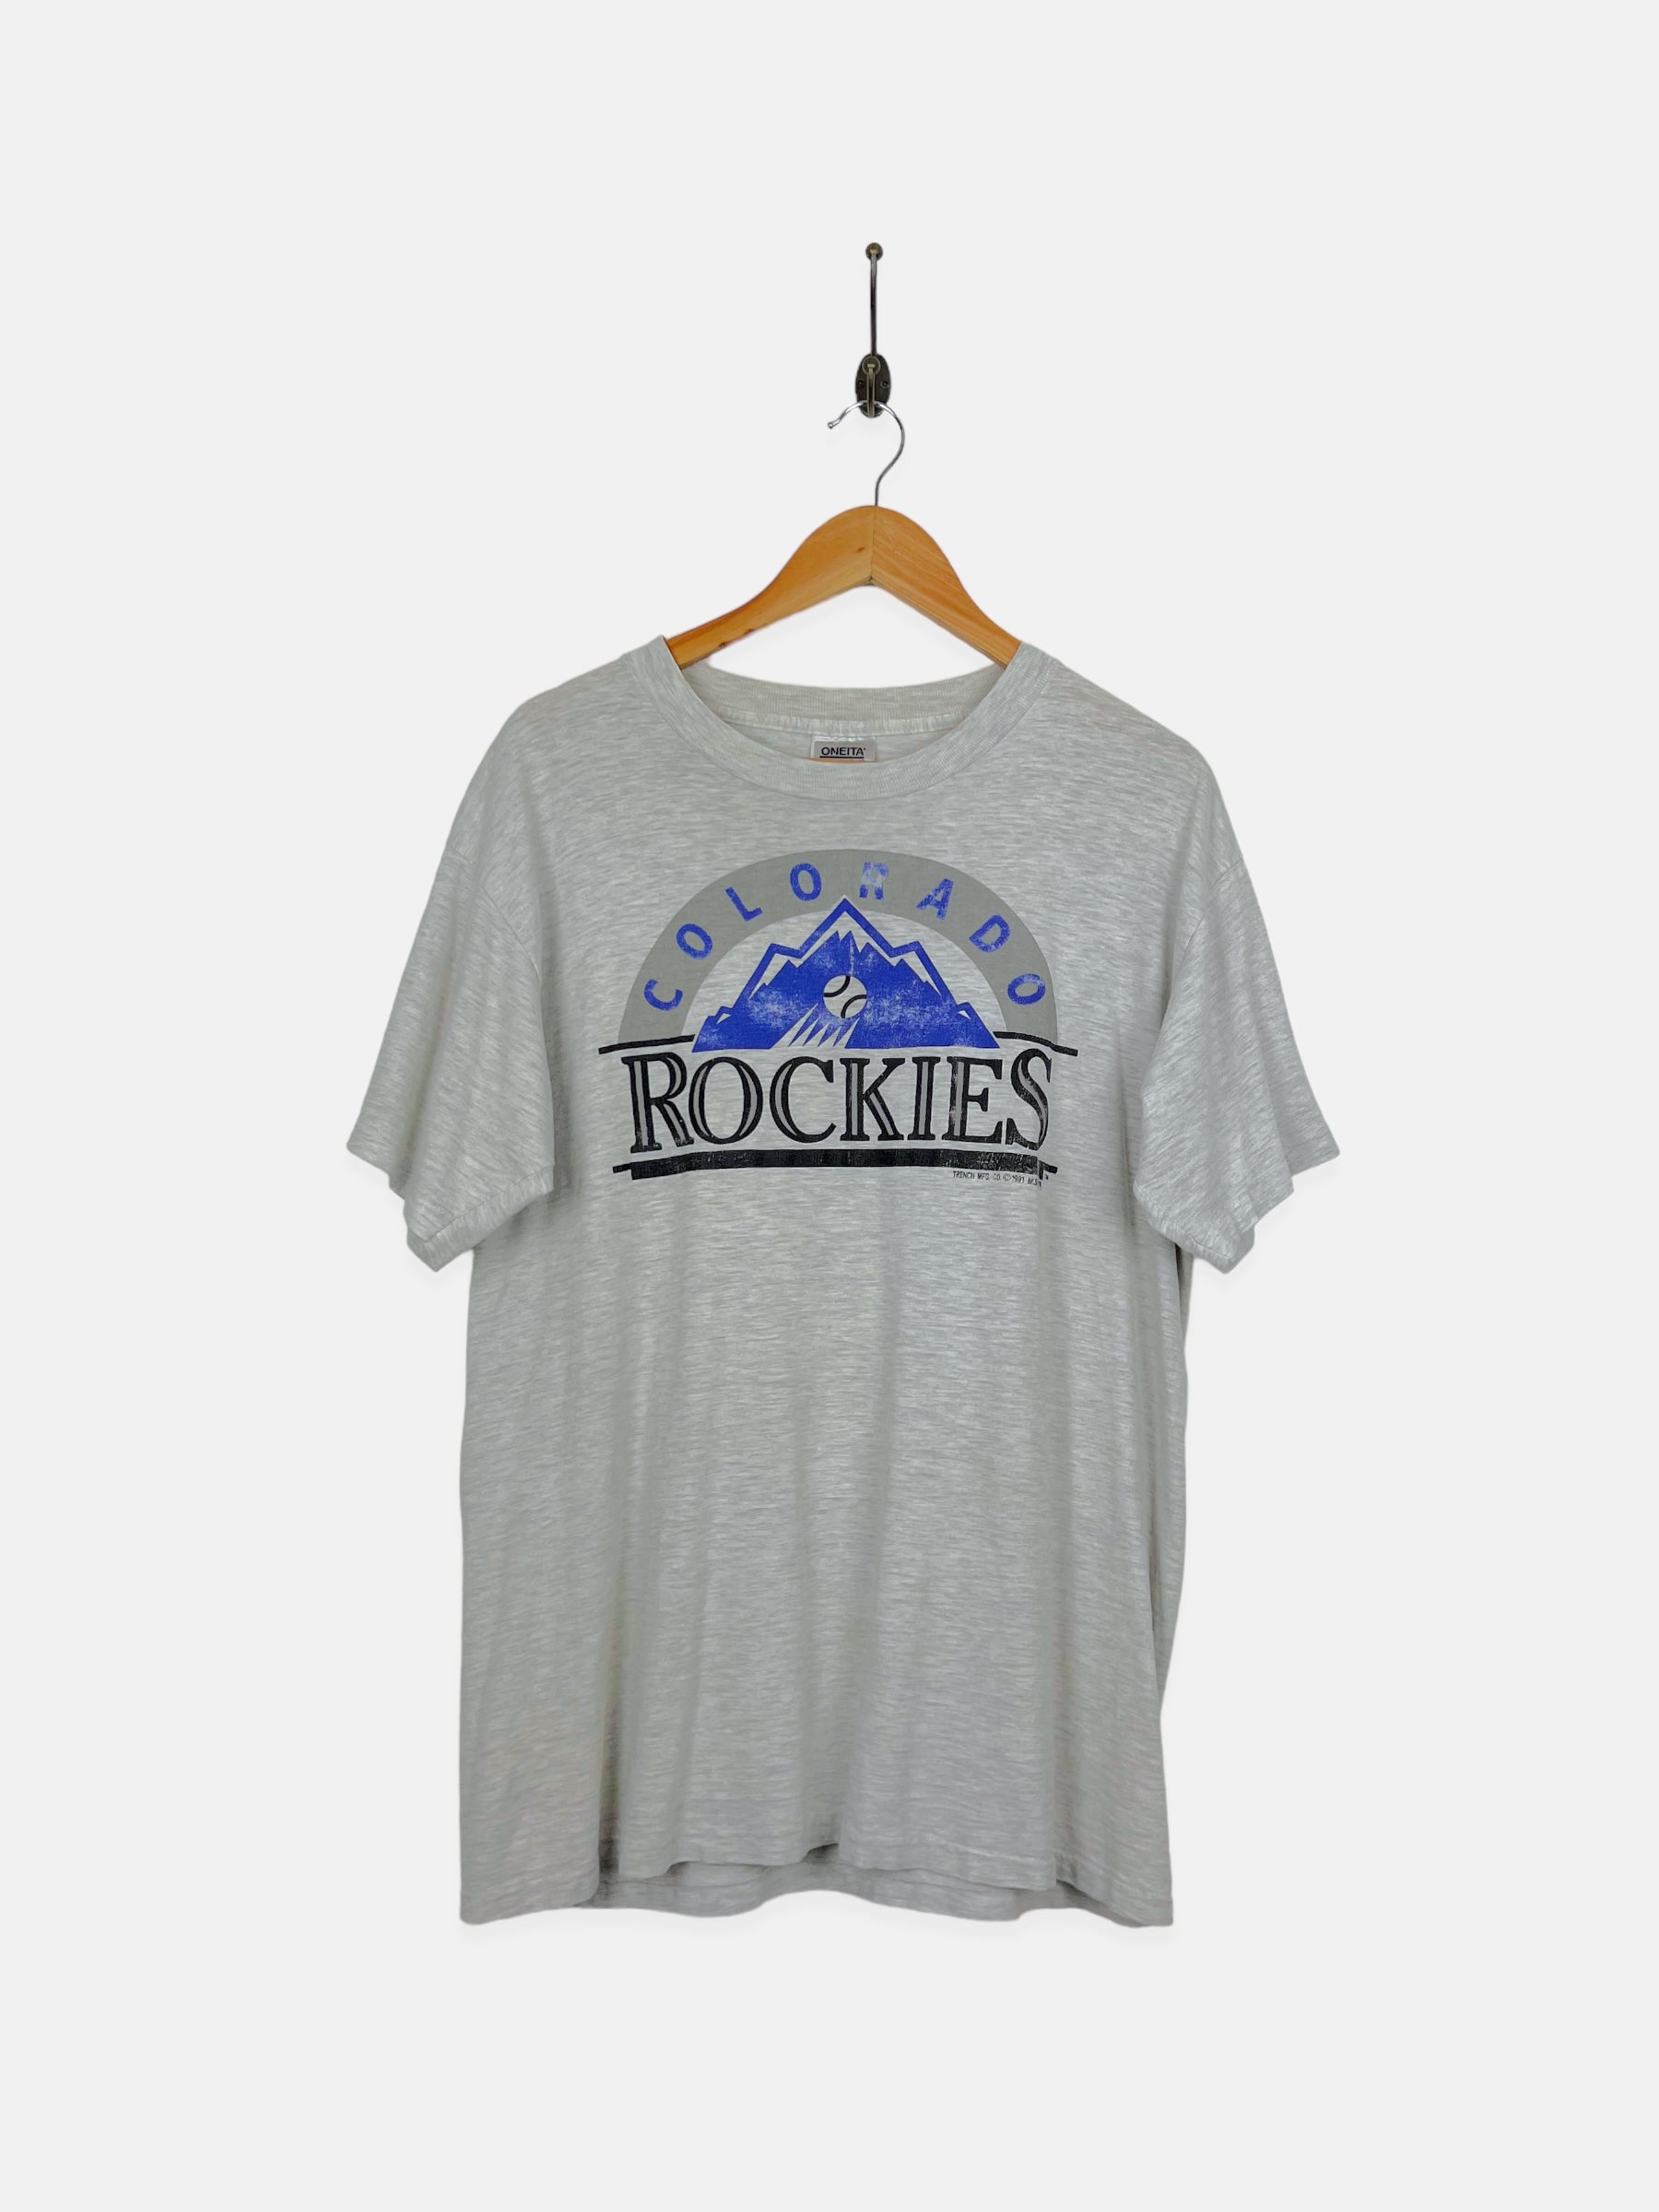 Vintage MLB Colorado Rockies Tee Shirt 1991 Size Large Made in USA